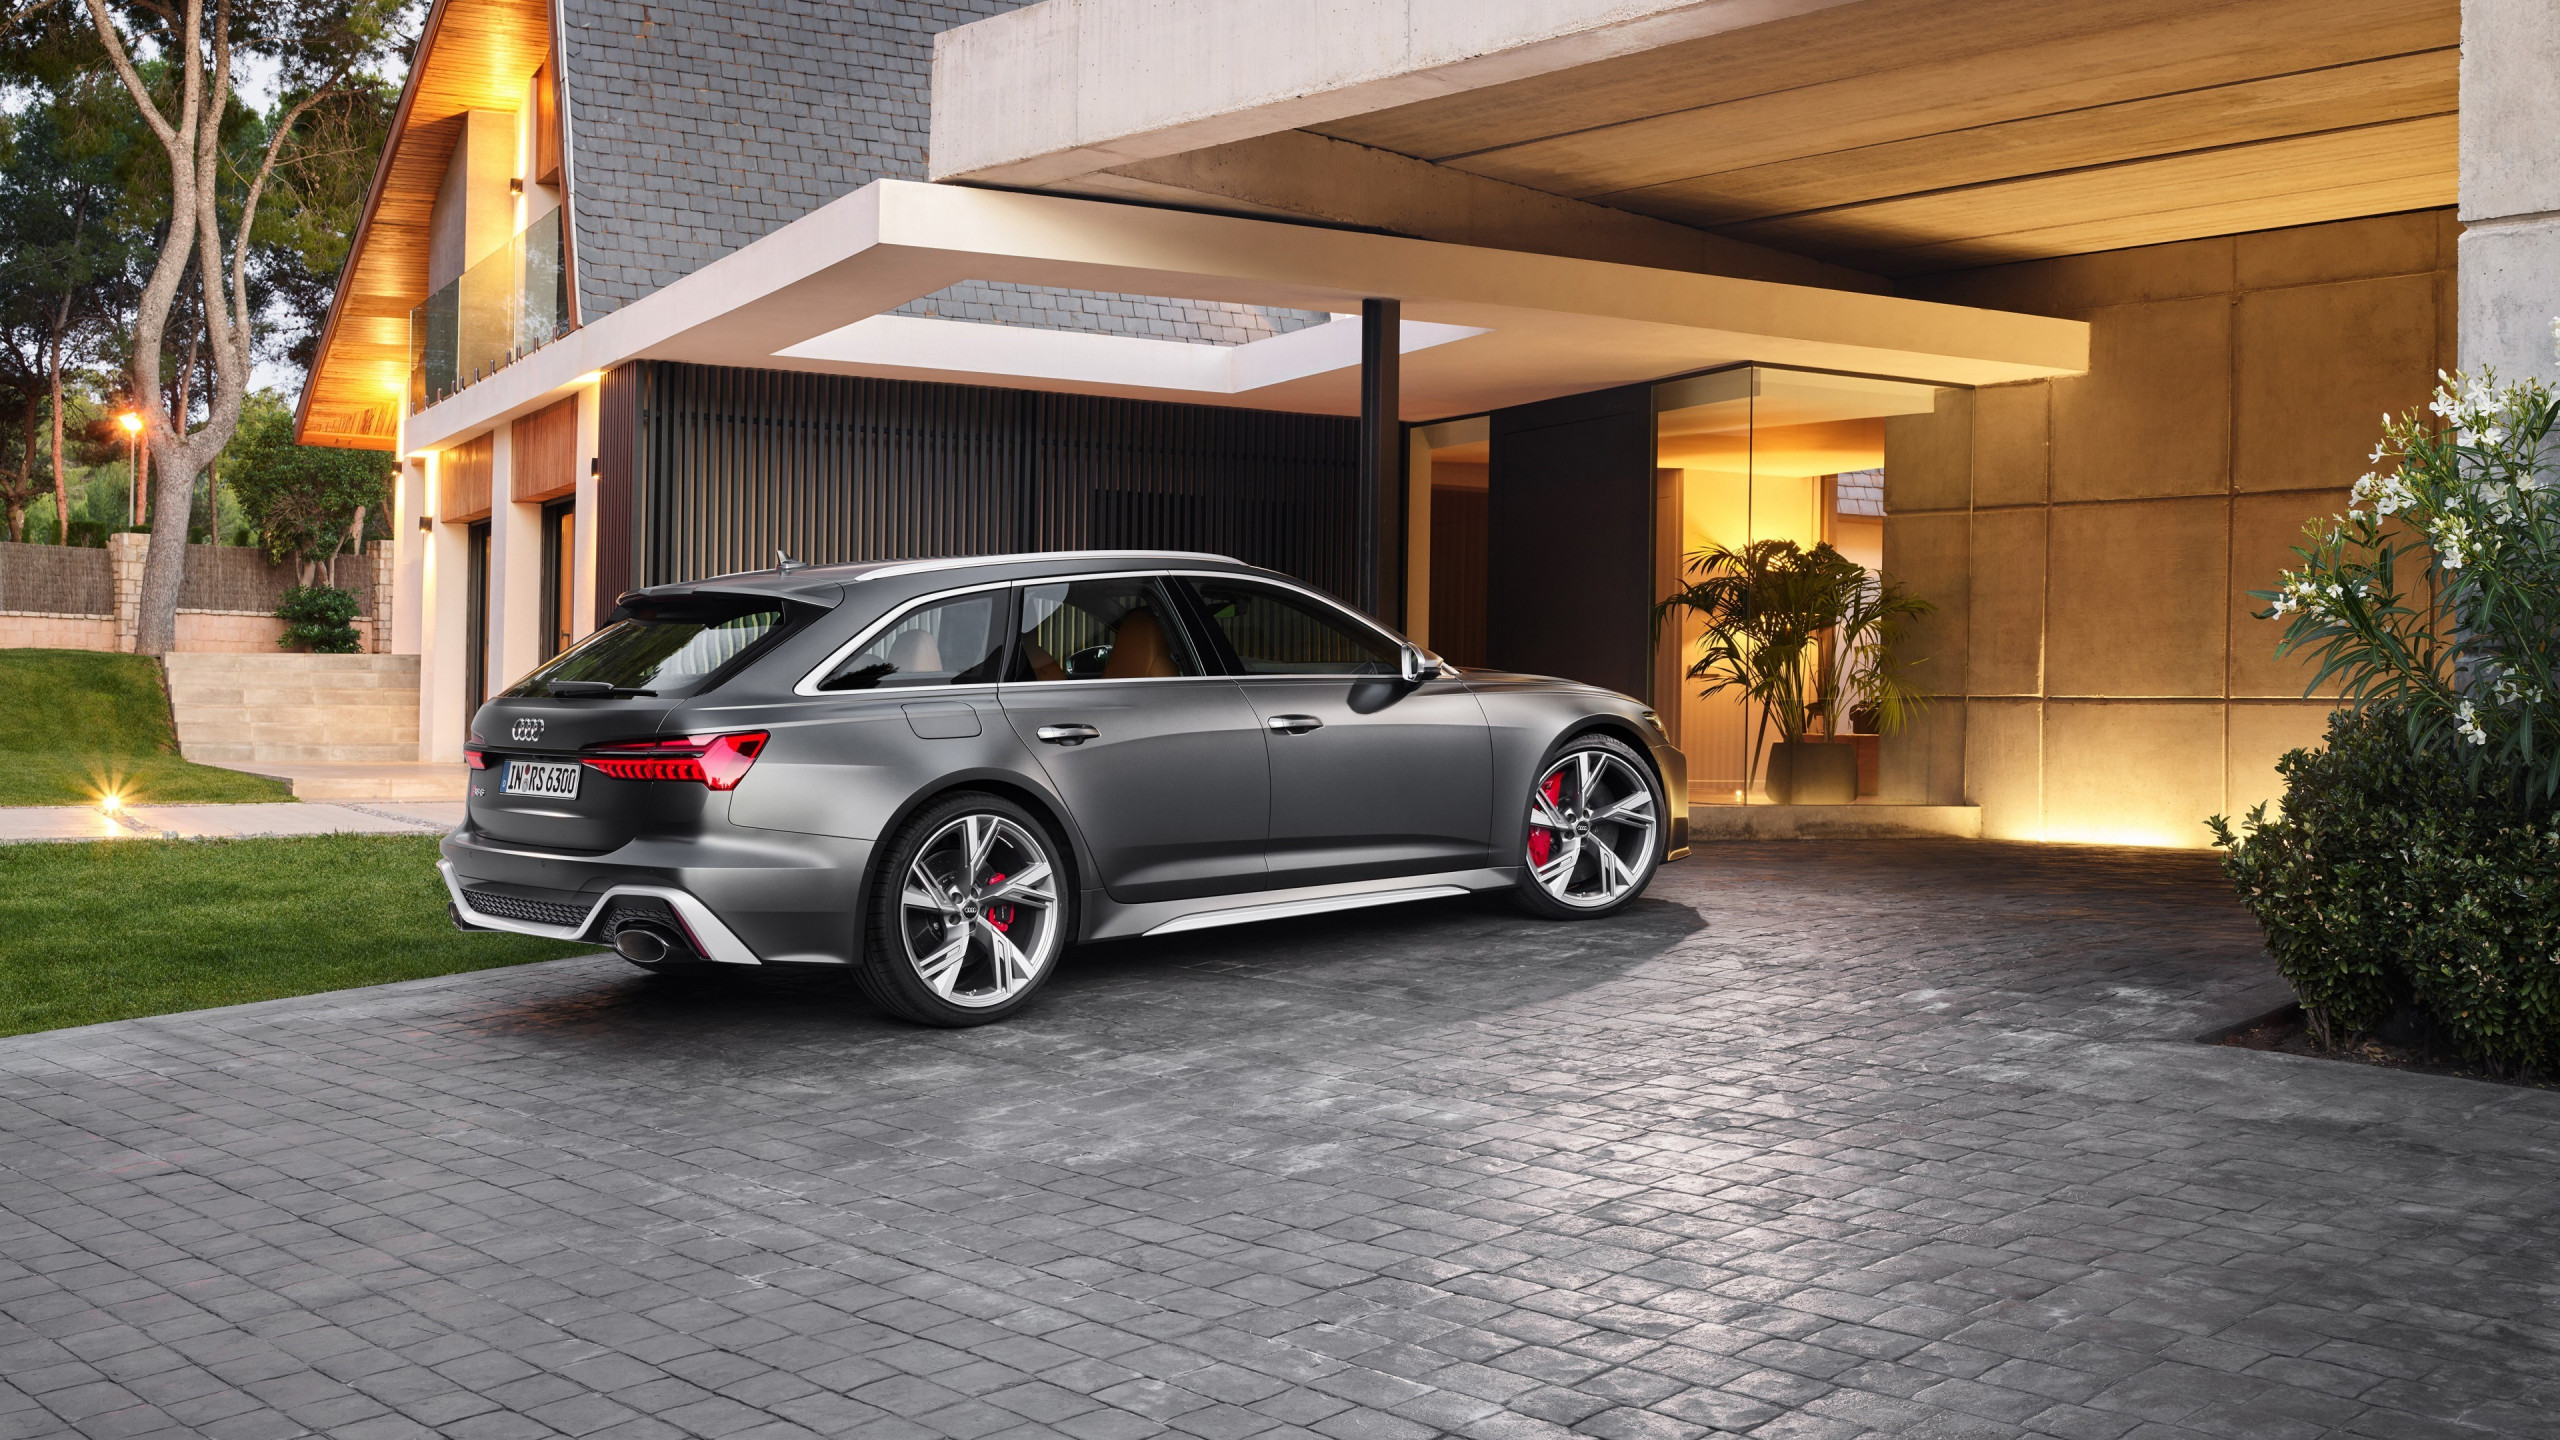 Download wallpaper: Audi RS 6 Avant 2560x1440